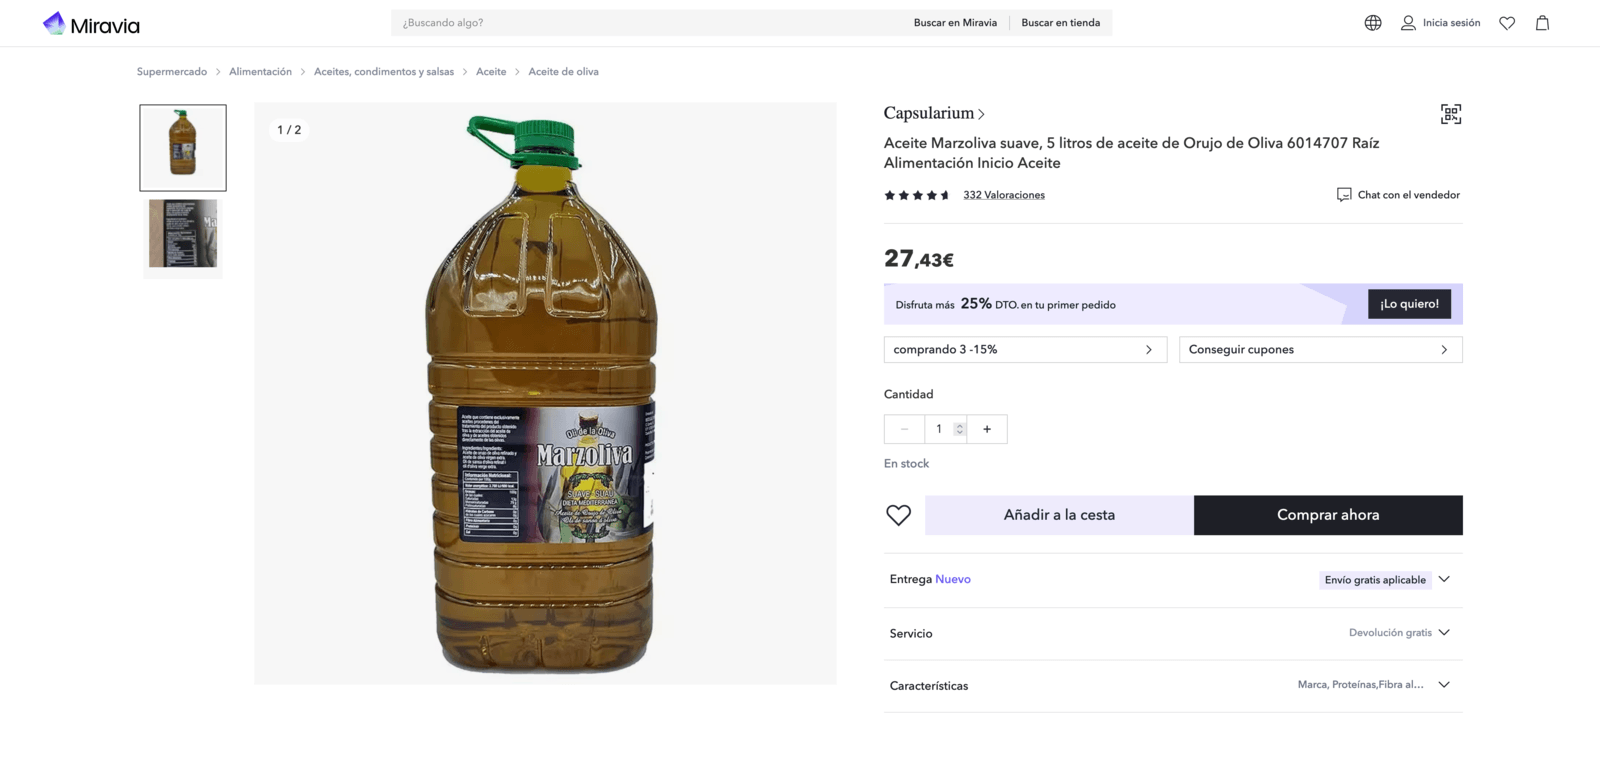 Una garrafa de 5 L de Aceite de Oliva por solo 10 €: Oferta Única - Portada